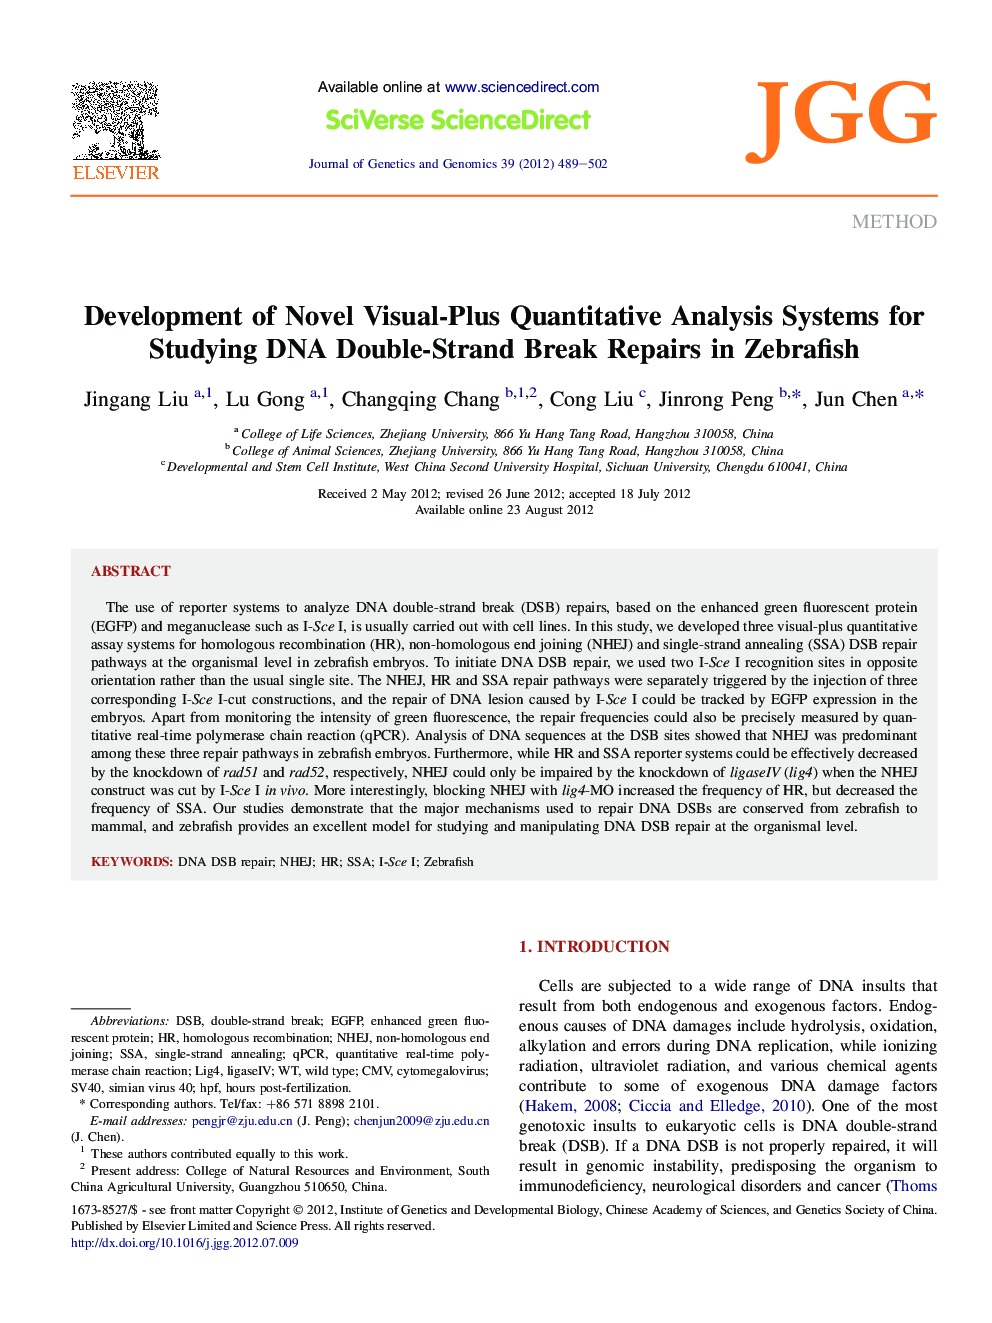 Development of Novel Visual-Plus Quantitative Analysis Systems for Studying DNA Double-Strand Break Repairs in Zebrafish